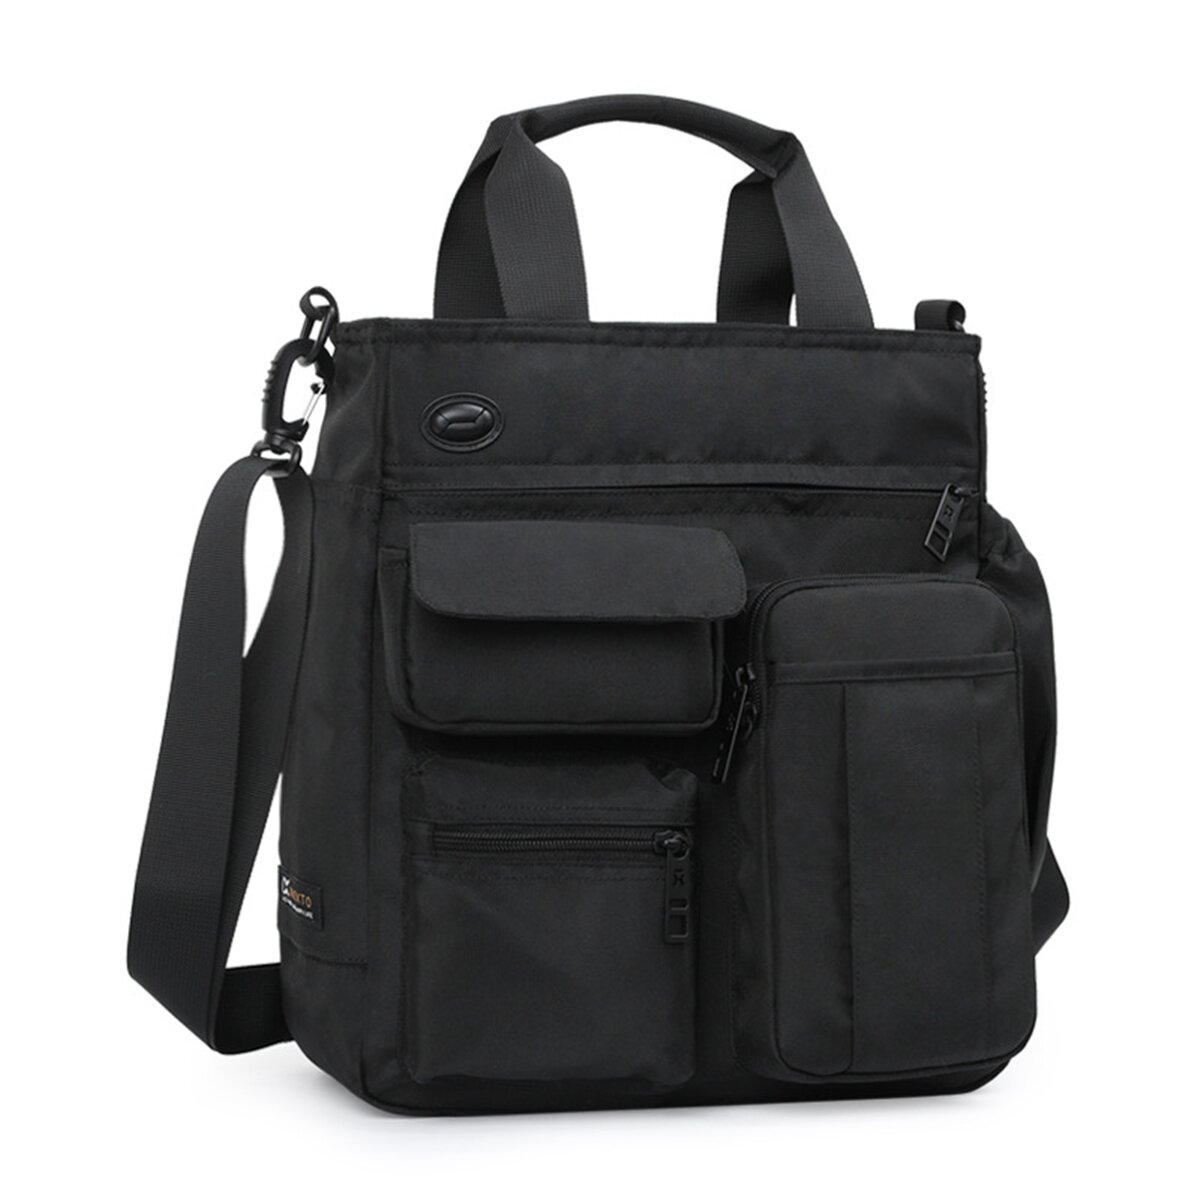 

Large Capacity Simple Casual laptop Bag Waterproof Multifunctional Shoulder Handbag For Laptop Tablets Documents